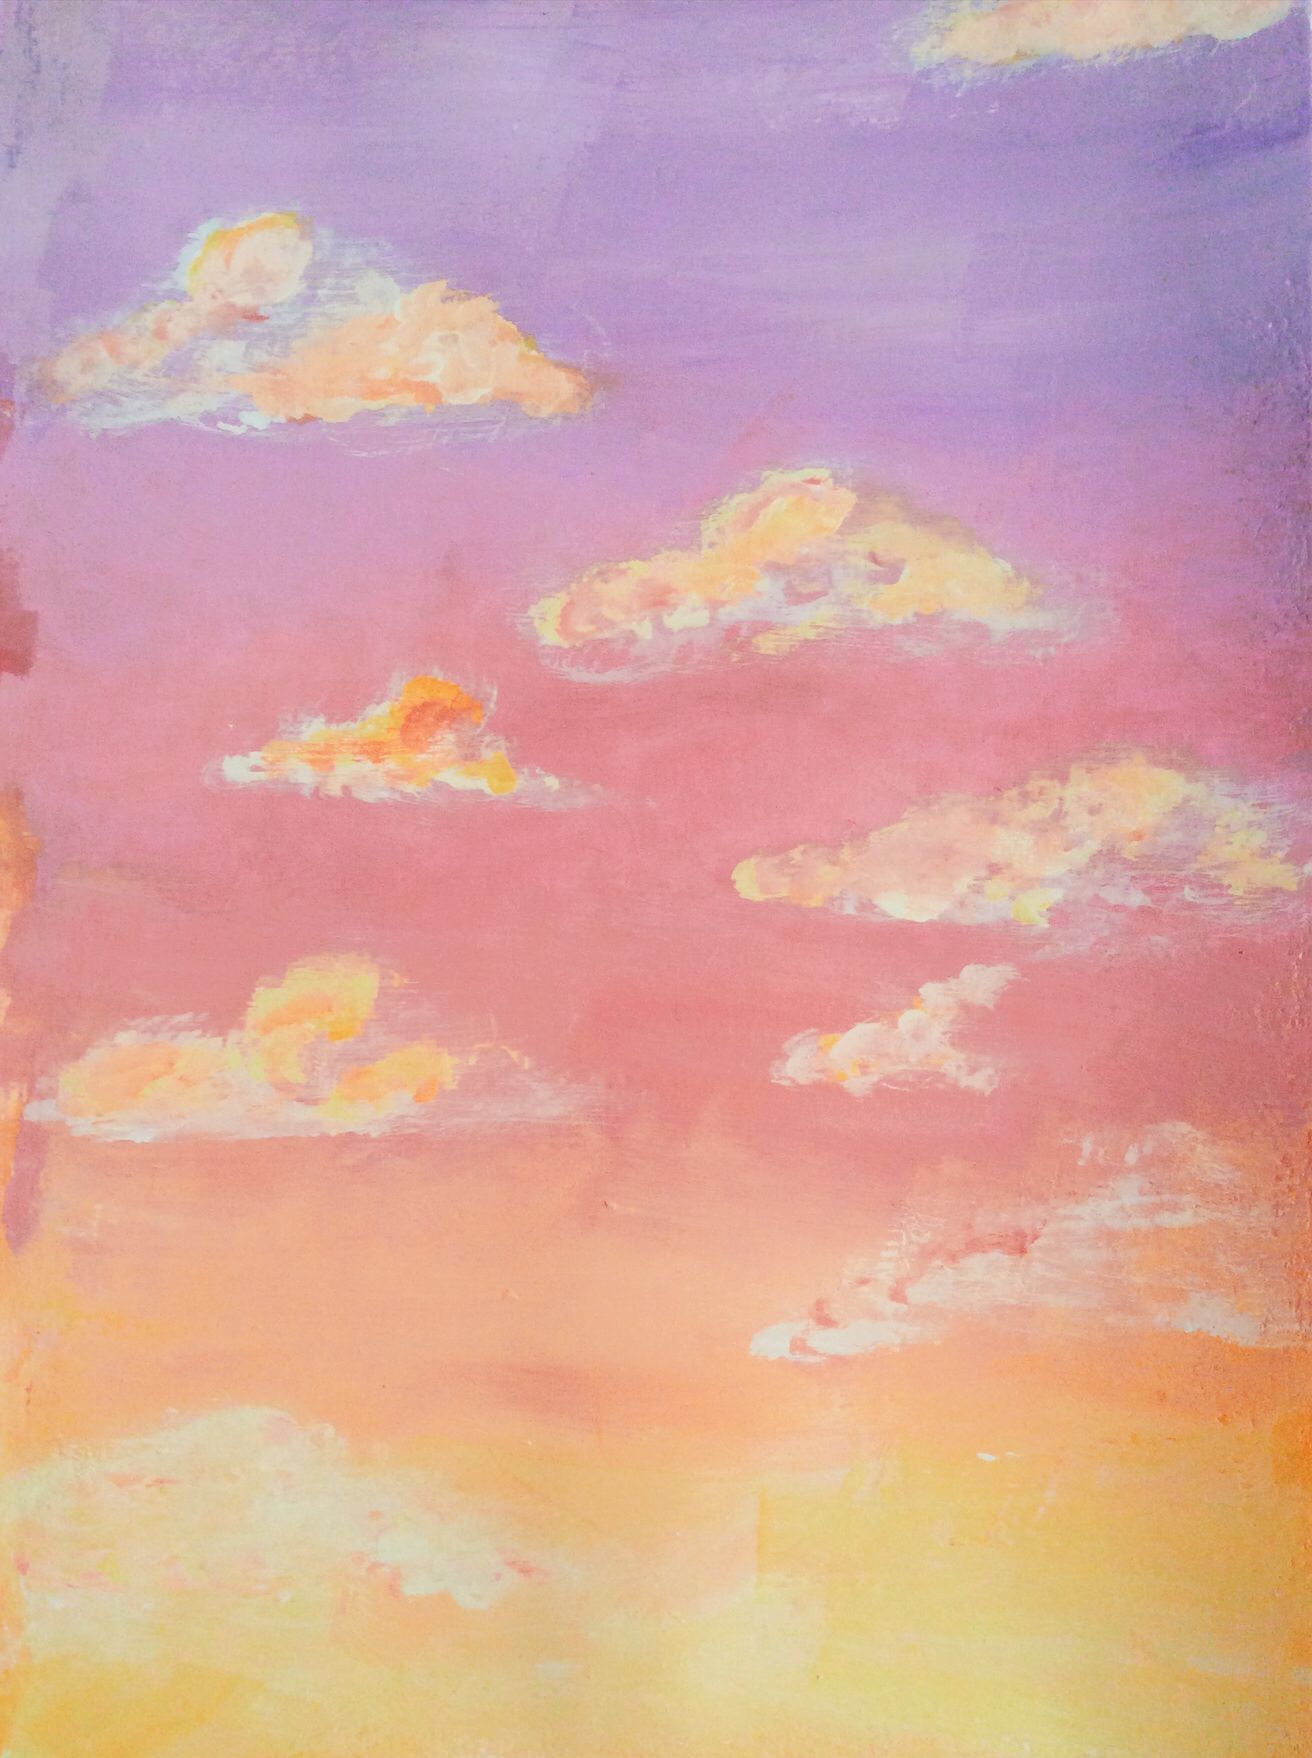 Cloud Painting Ideas Inspiration. Sky art painting, Sunset painting, Sunset canvas painting